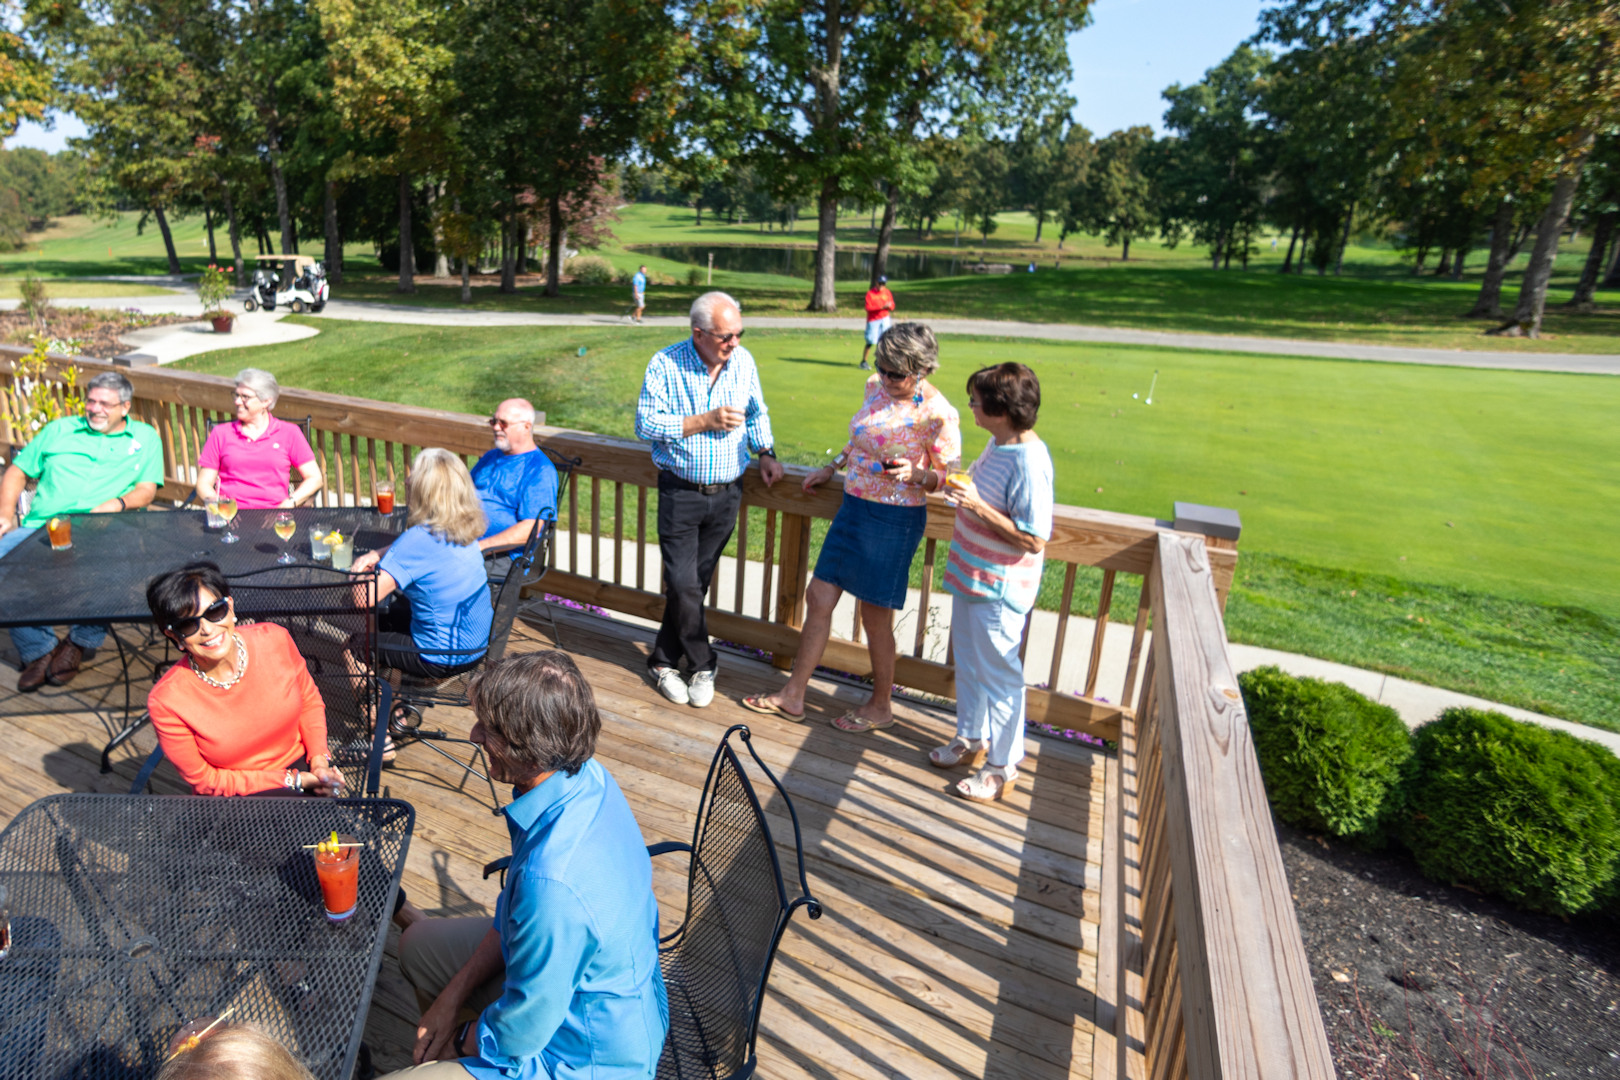 Fairfield Glade | Tennessee Resort Communities | Best Golf TN